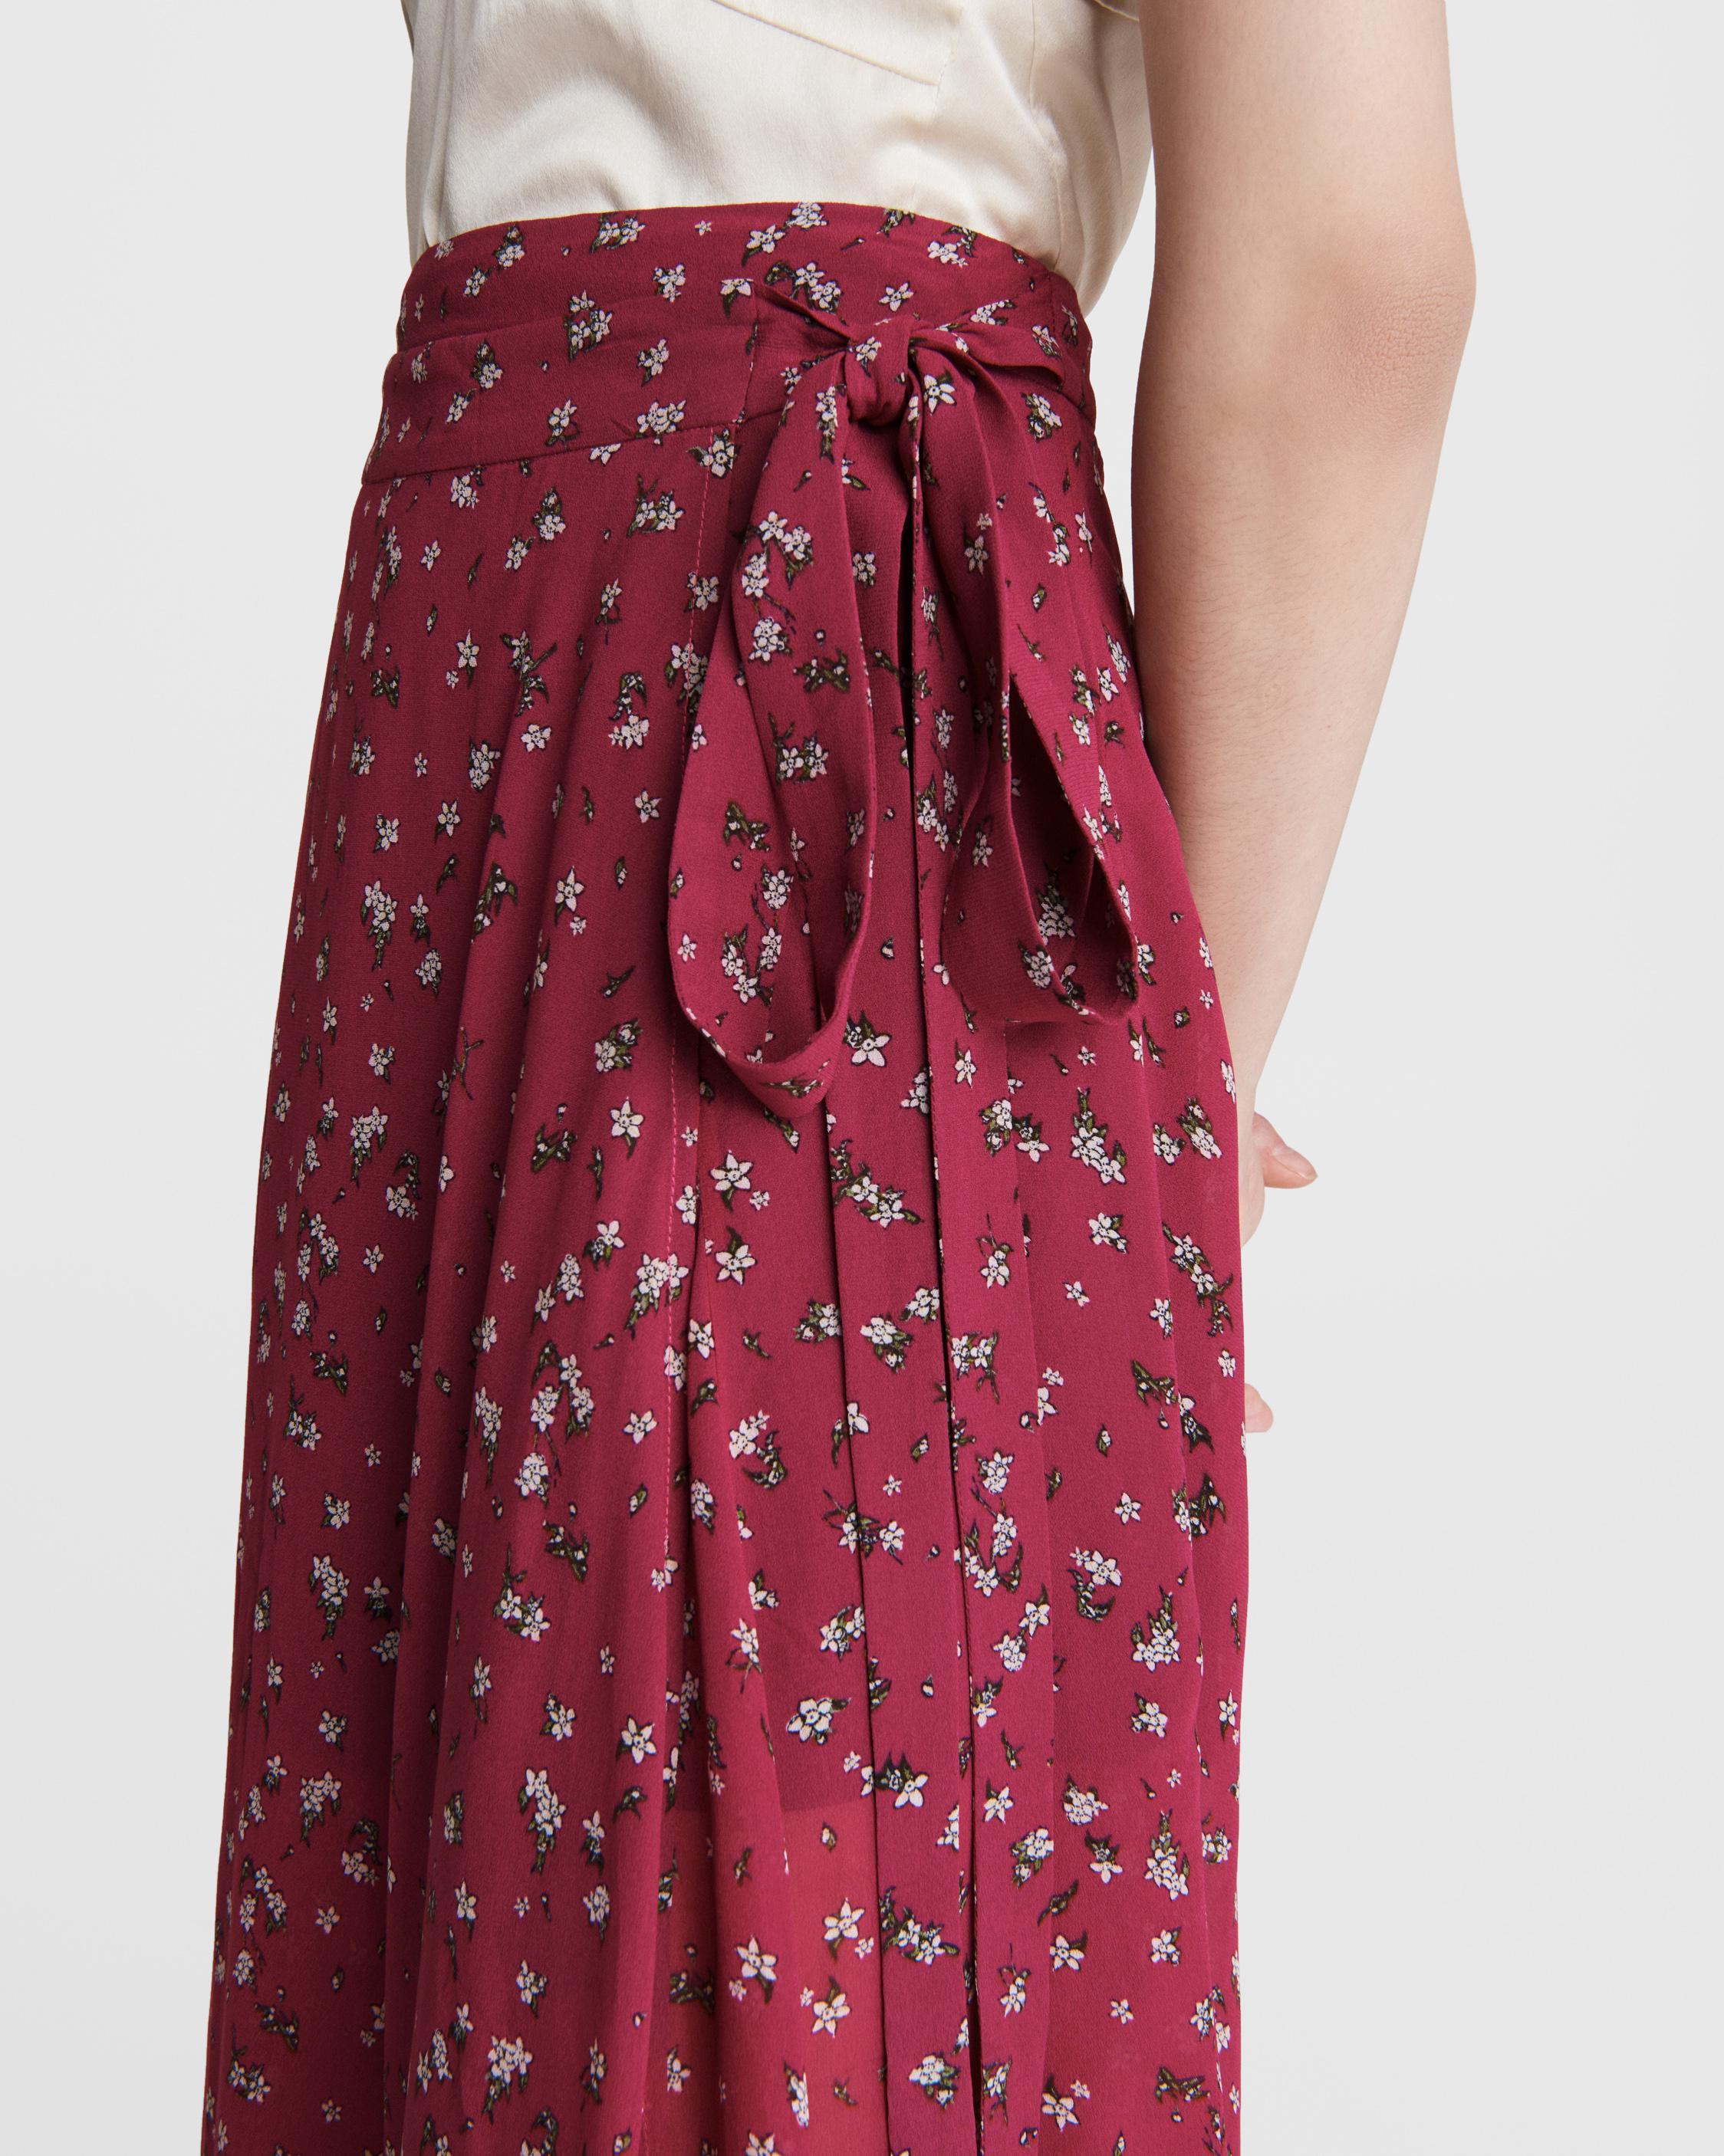 Rag & Bone Lily Floral Midi Skirt in Pink | Lyst